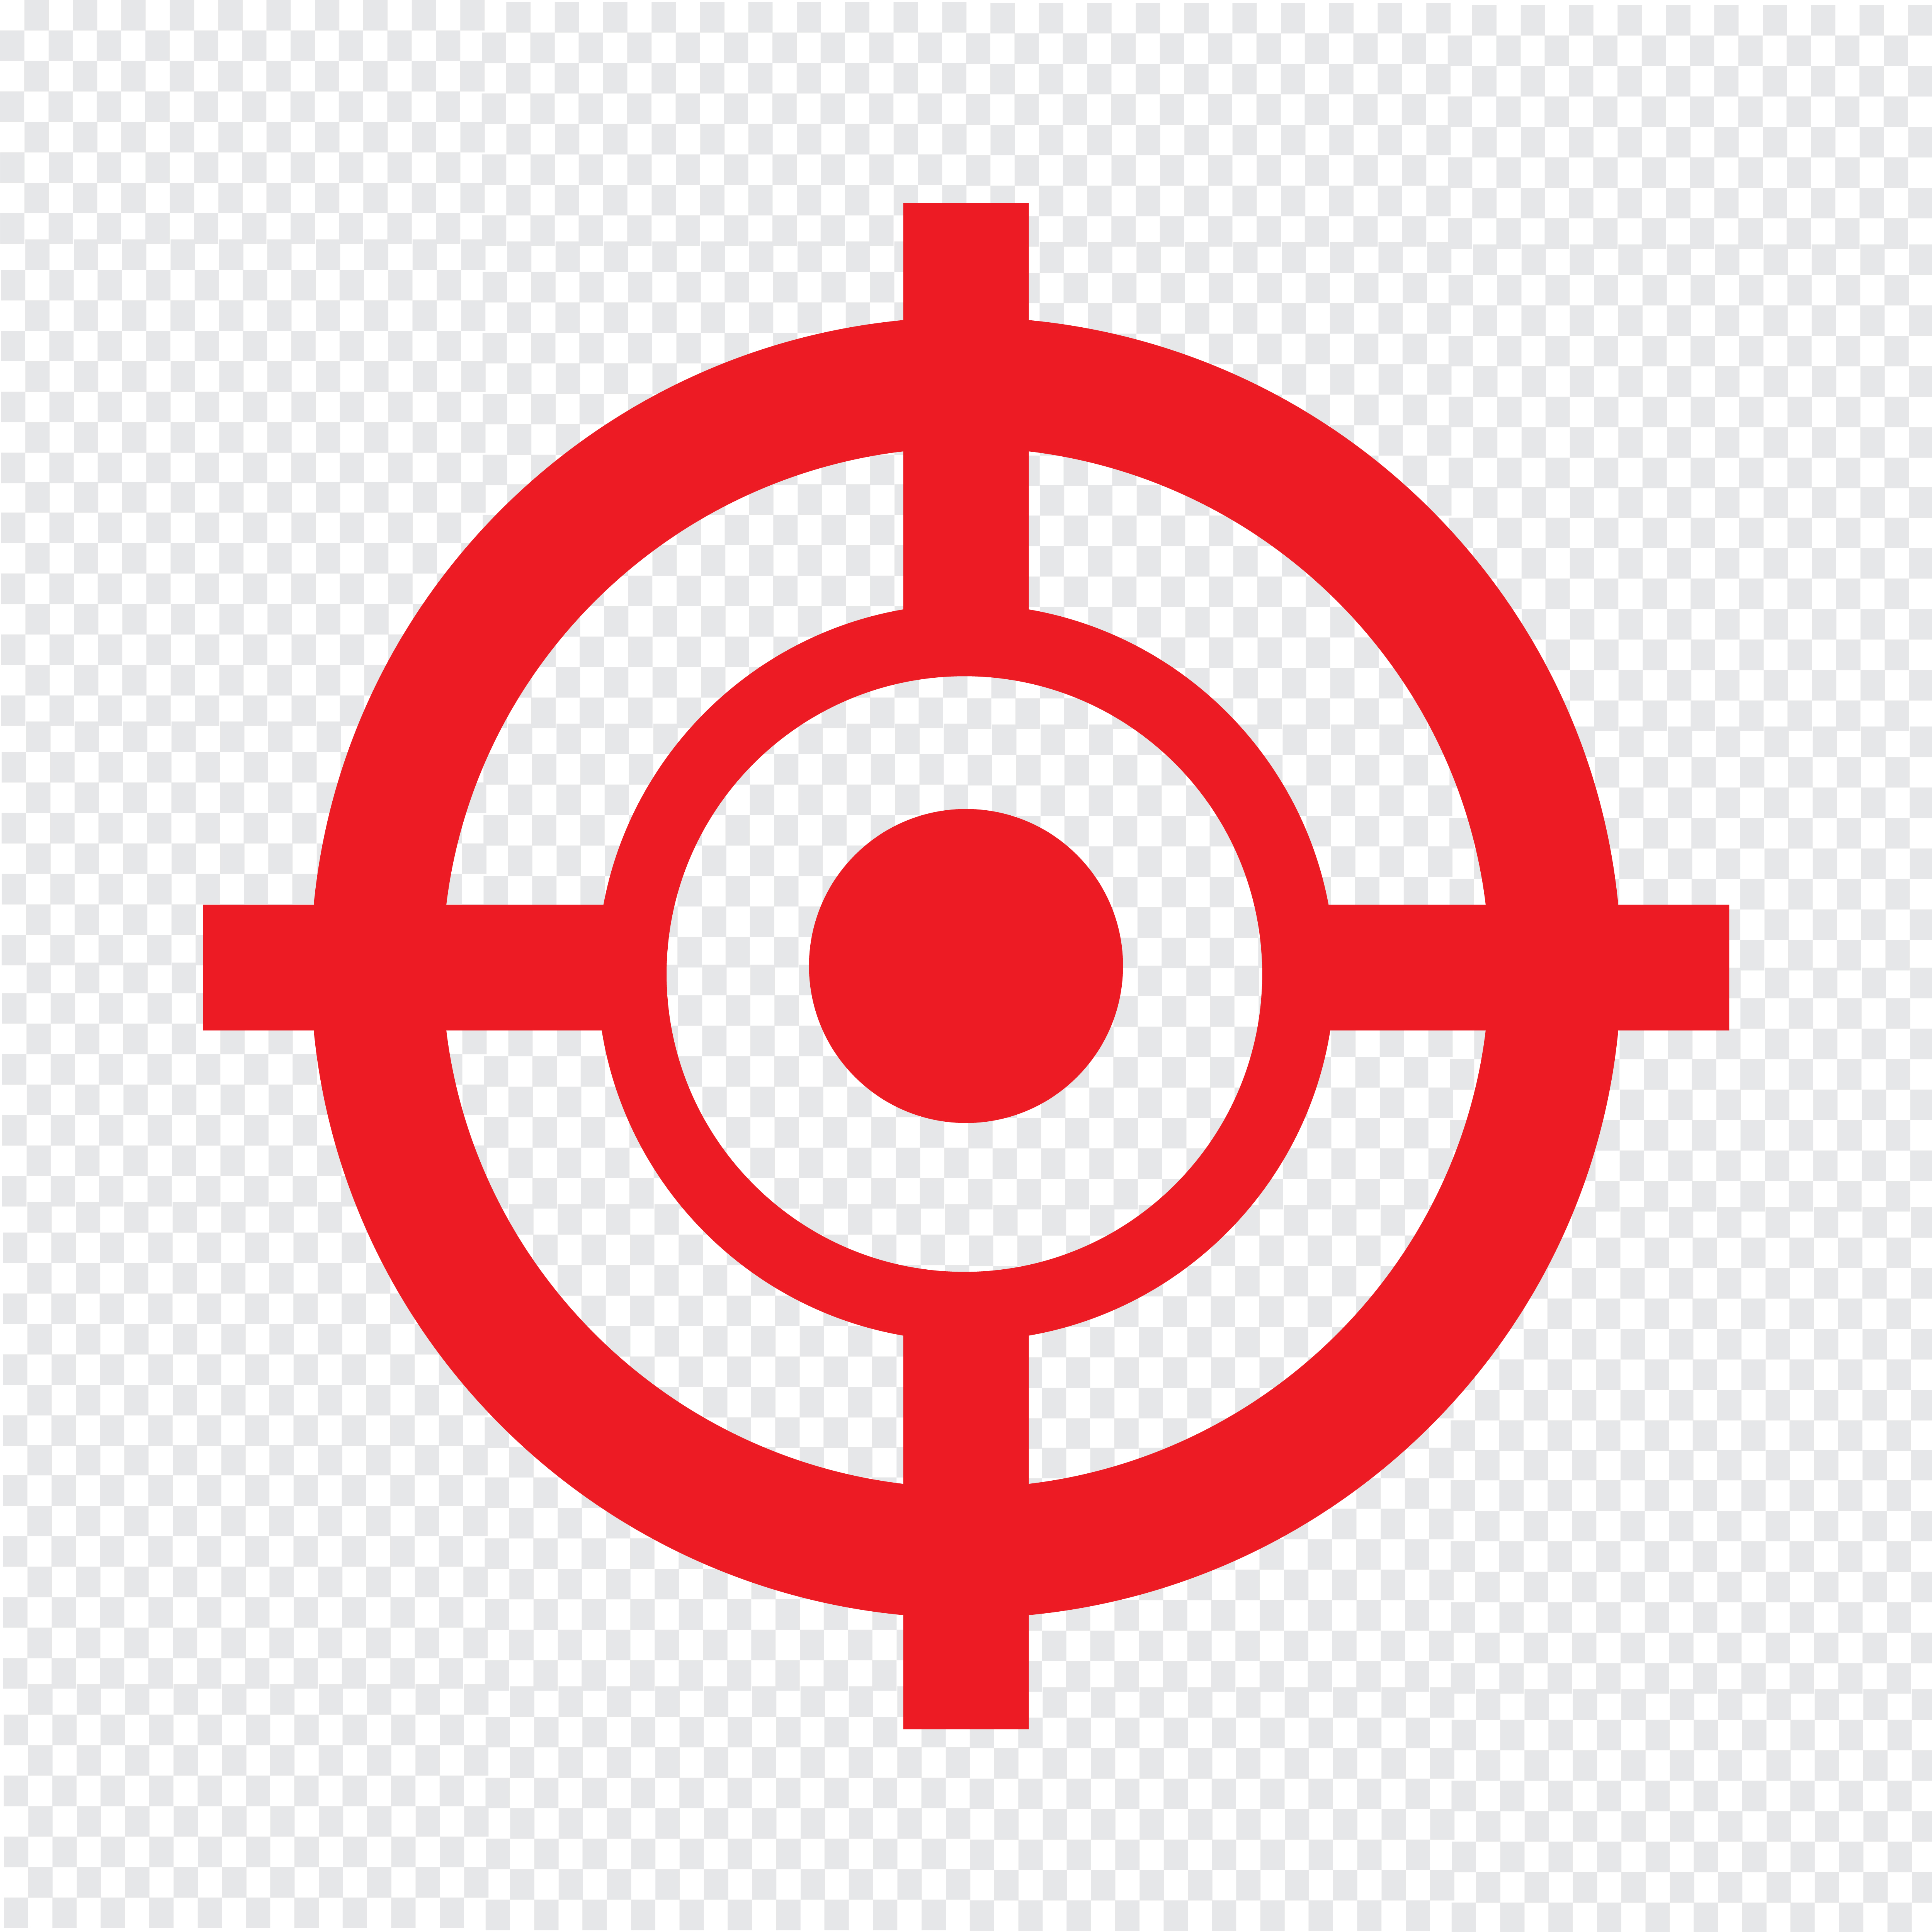 Download Target icon vector illustration - Download Free Vectors ...